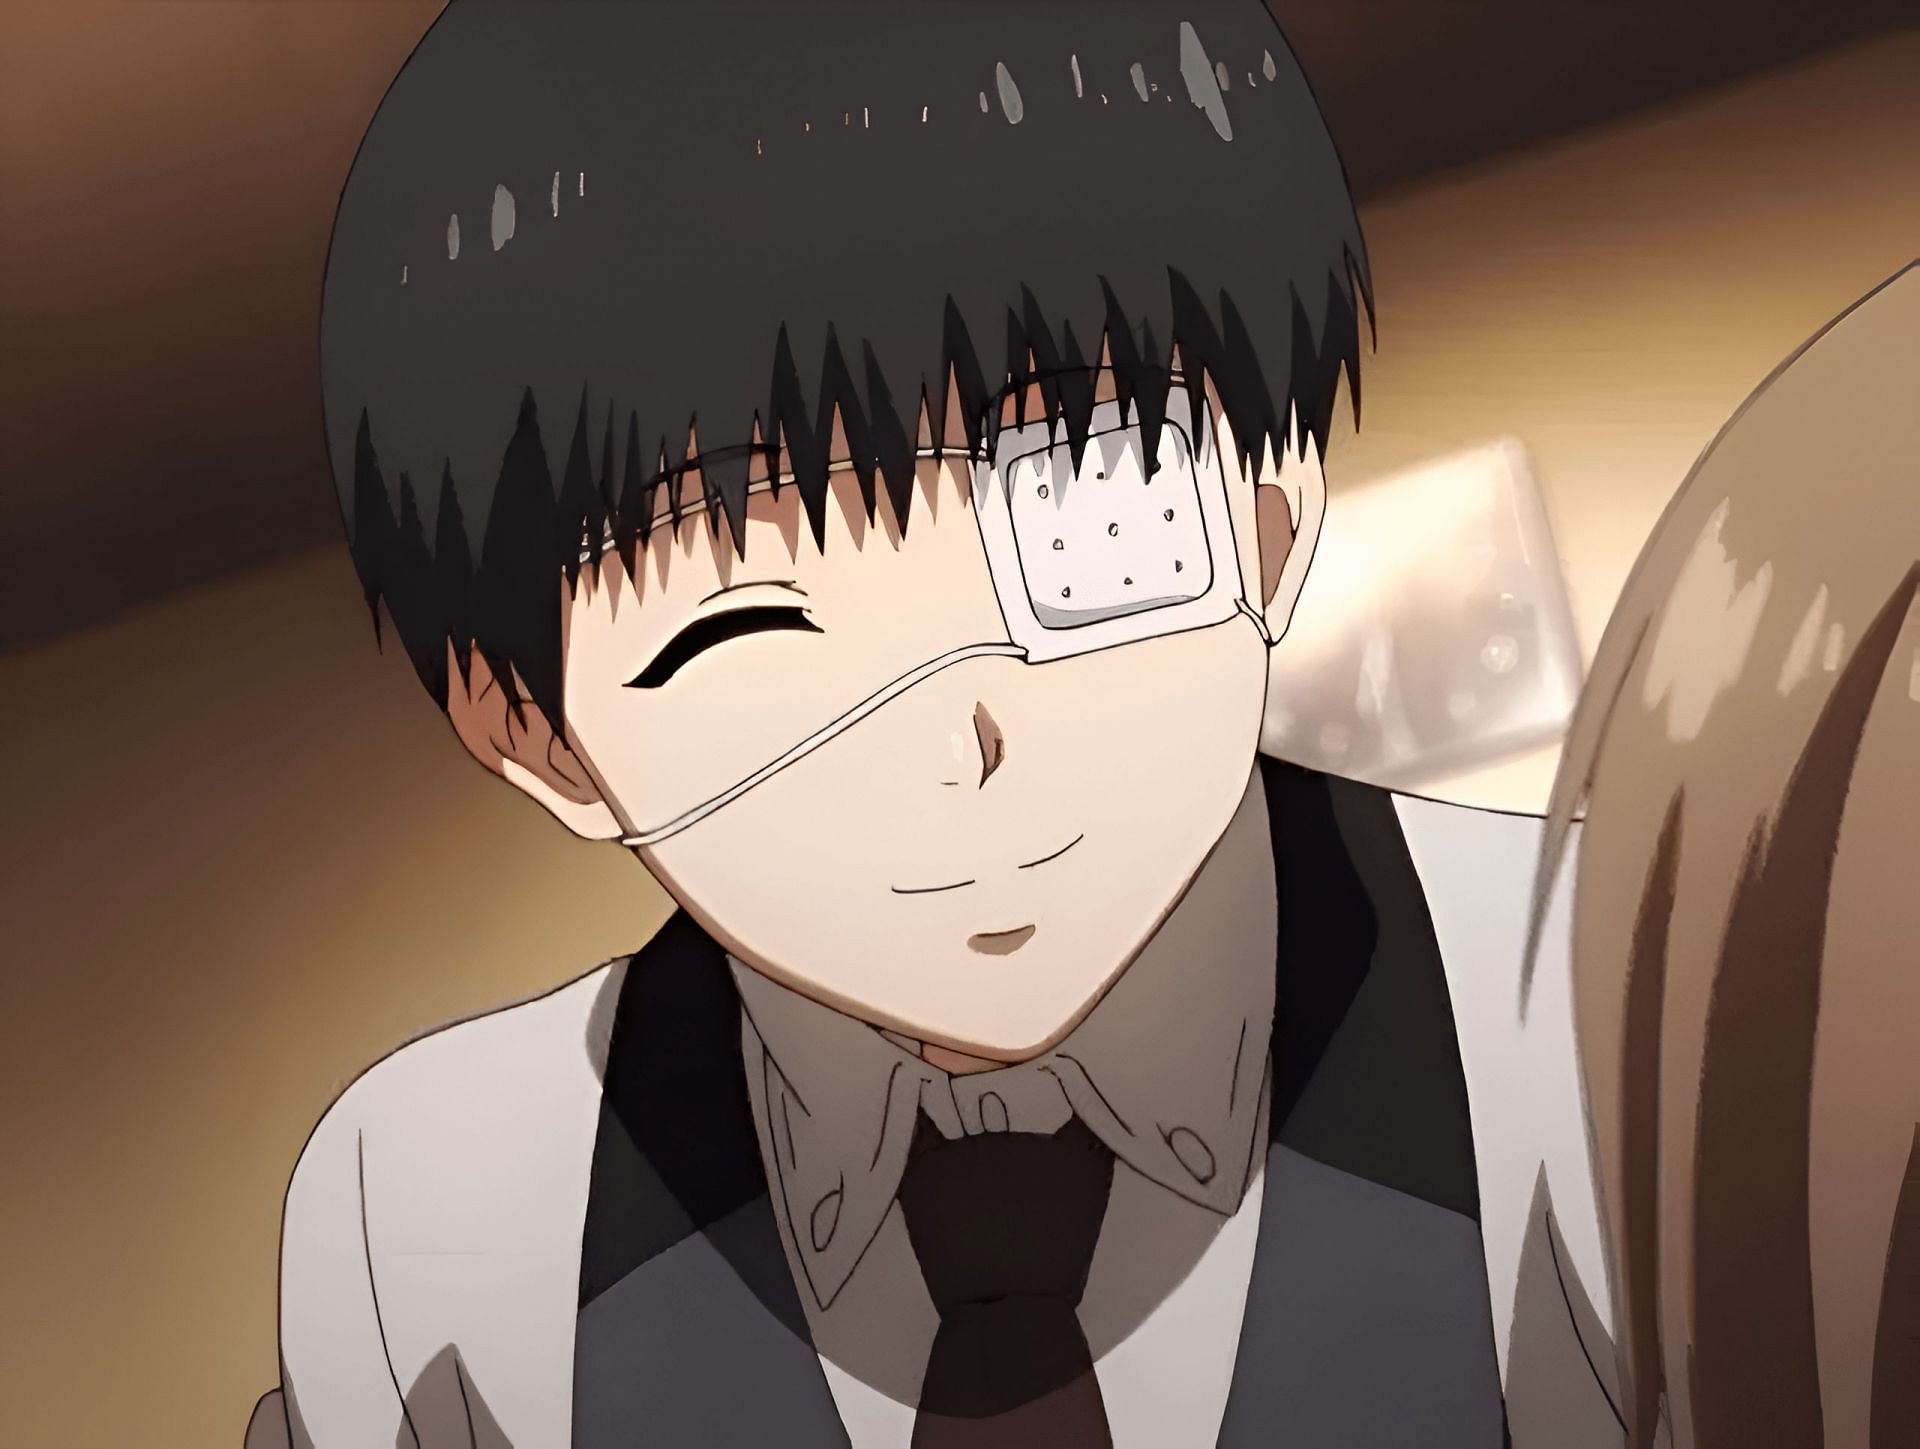 Kaneki as seen in the anime (Image via Studio Pierrot)